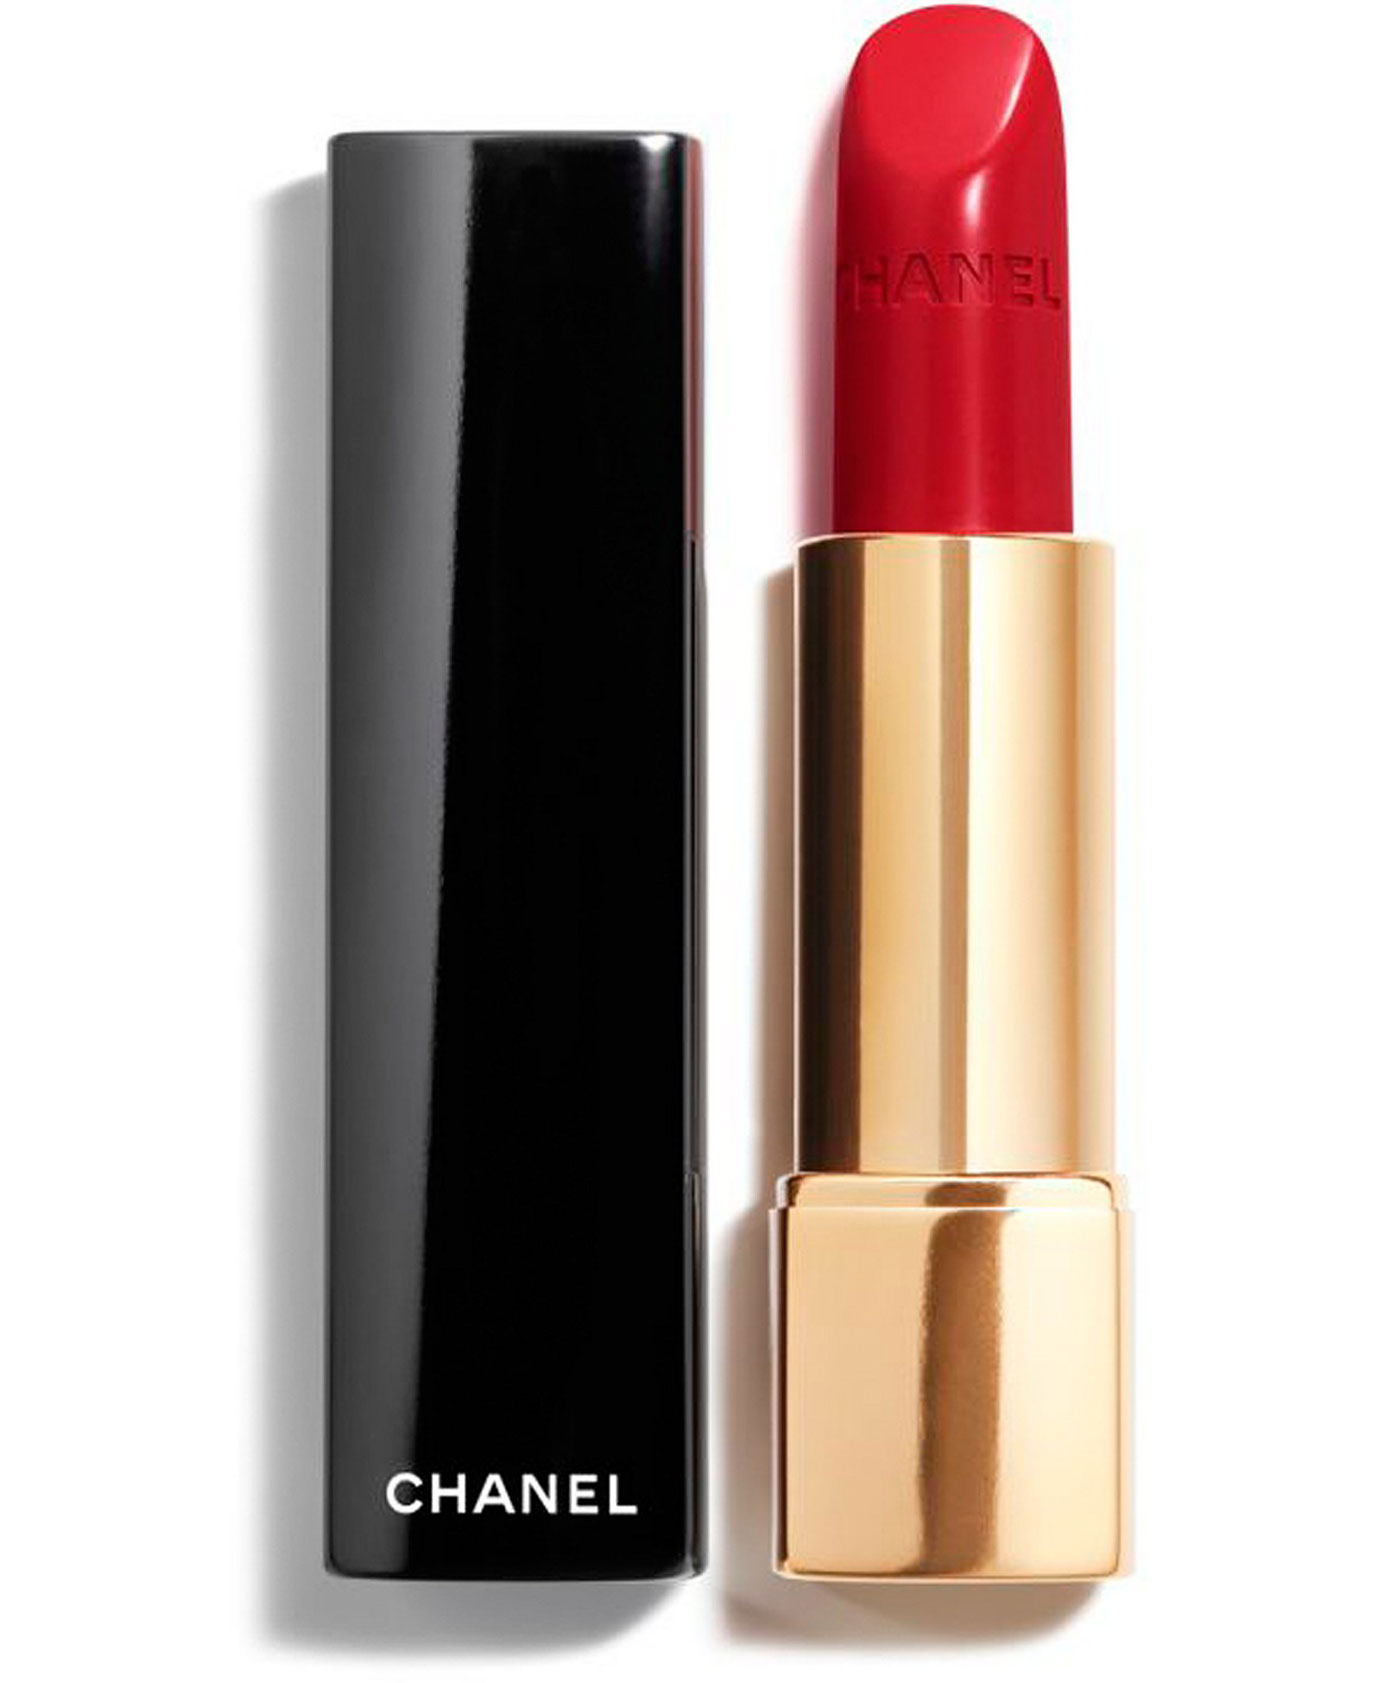 Chanel Luminous Intense Lip Color in 104 Passion.